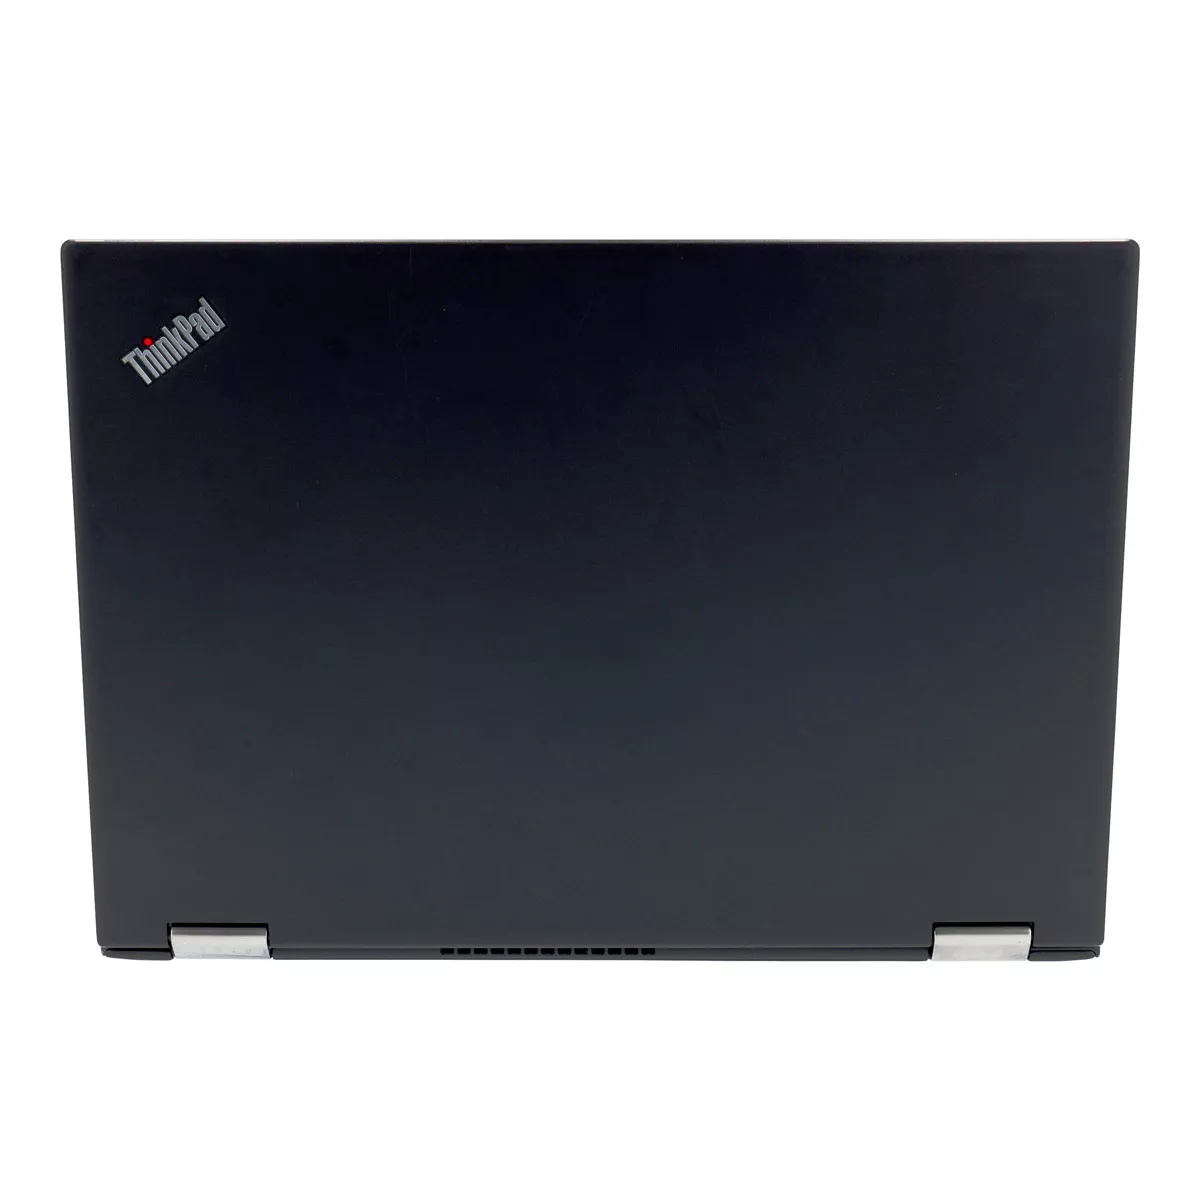 Lenovo ThinkPad X380 Yoga Core i7 8550U Full-HD Touch 500 GB M.2 SSD Webcam A